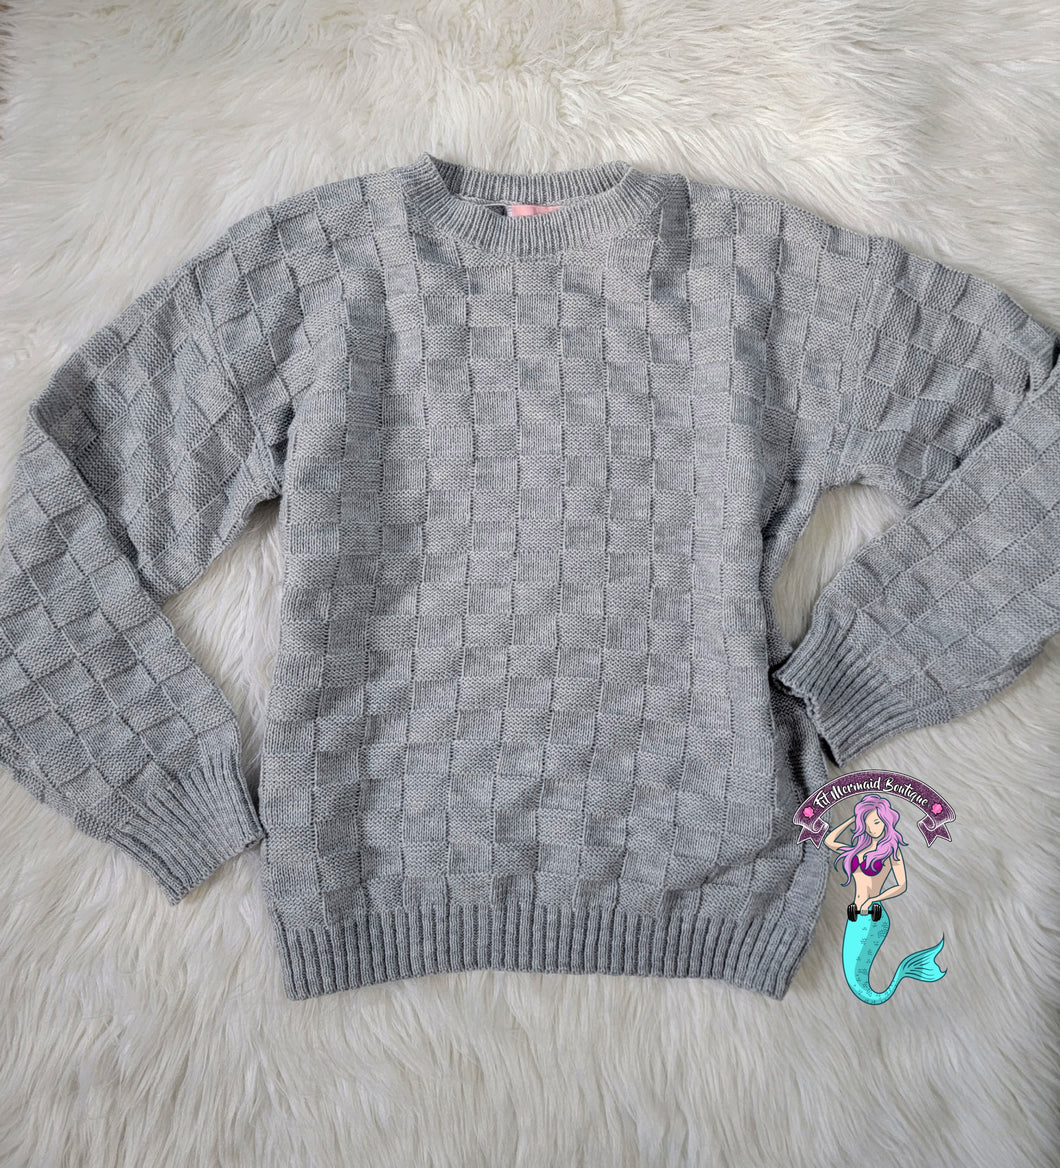 Gray sweater